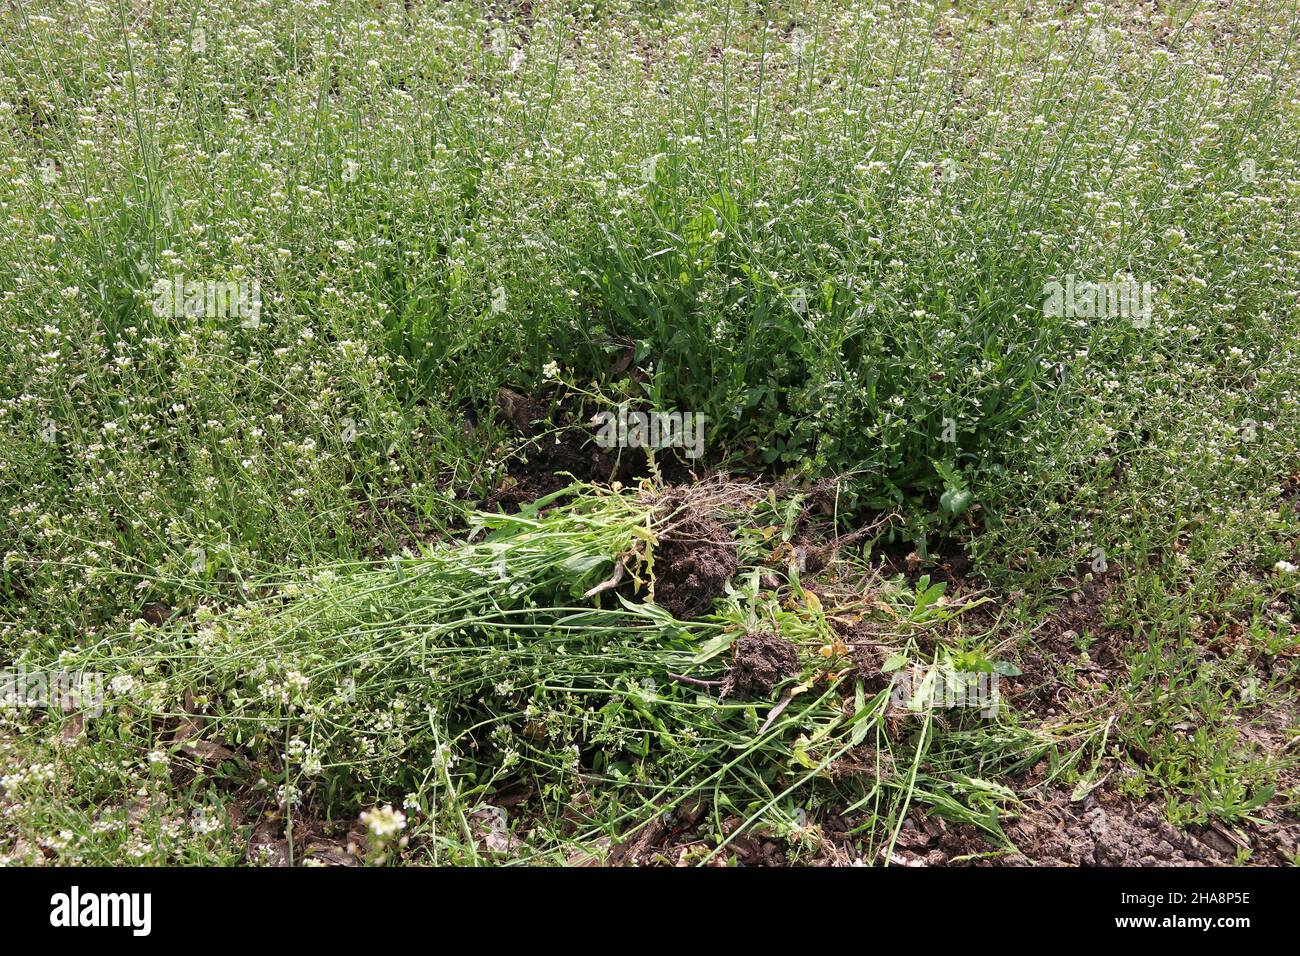 Uprooting a weed plant. Weed shepherd's purse.  Capsella bursa-pastoris. Stock Photo